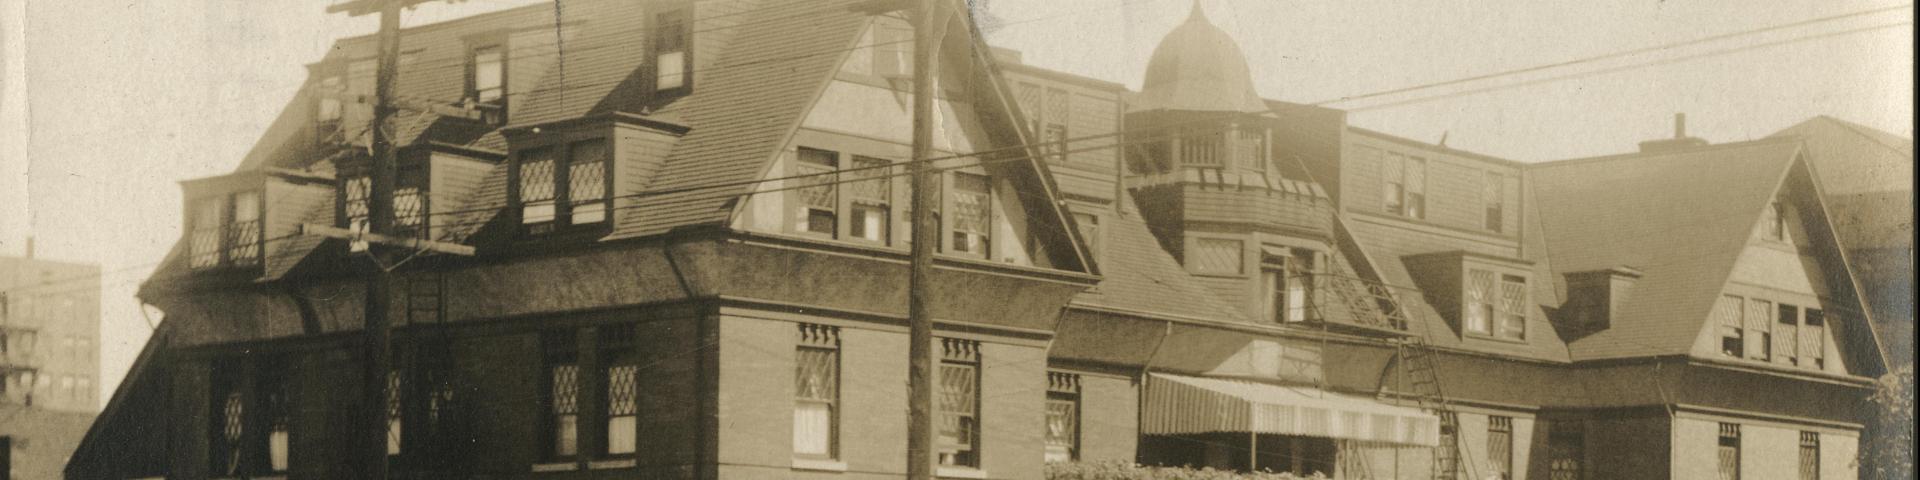 YWCA Building circa 1910